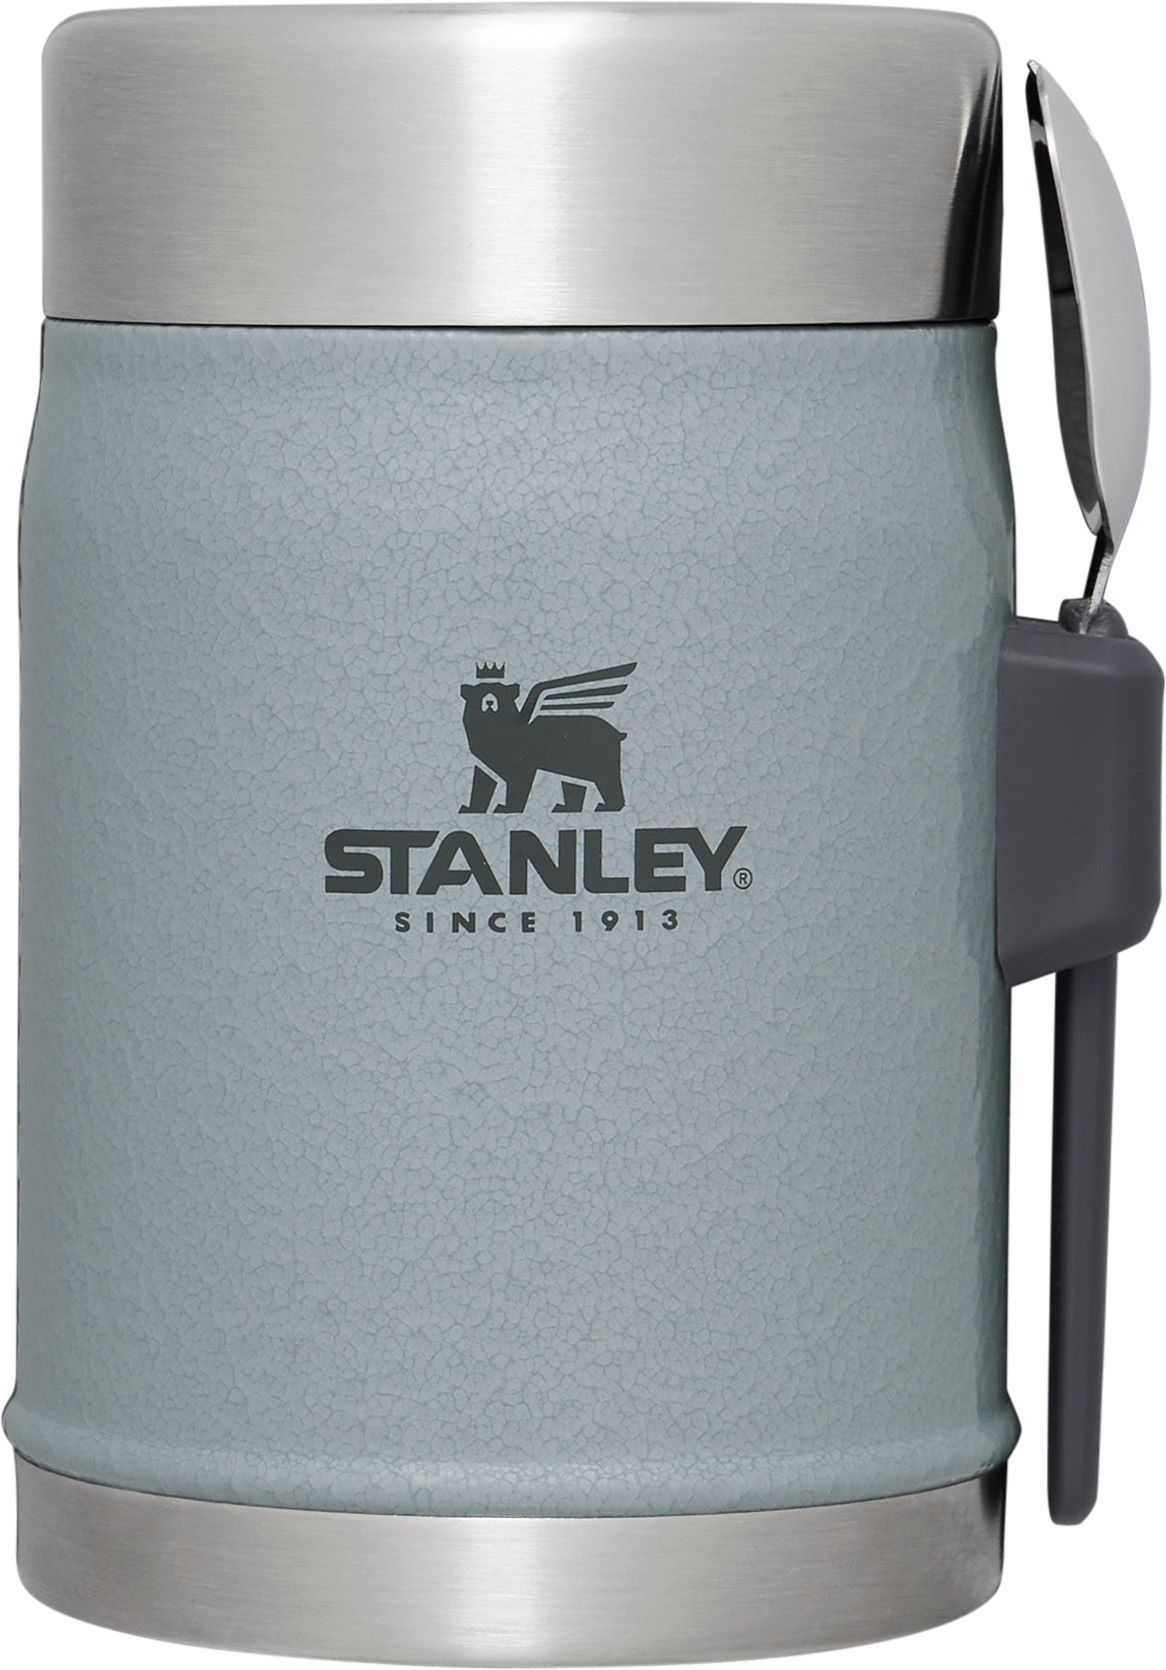 Stanley Classic Legendary Food Jar plus Spork